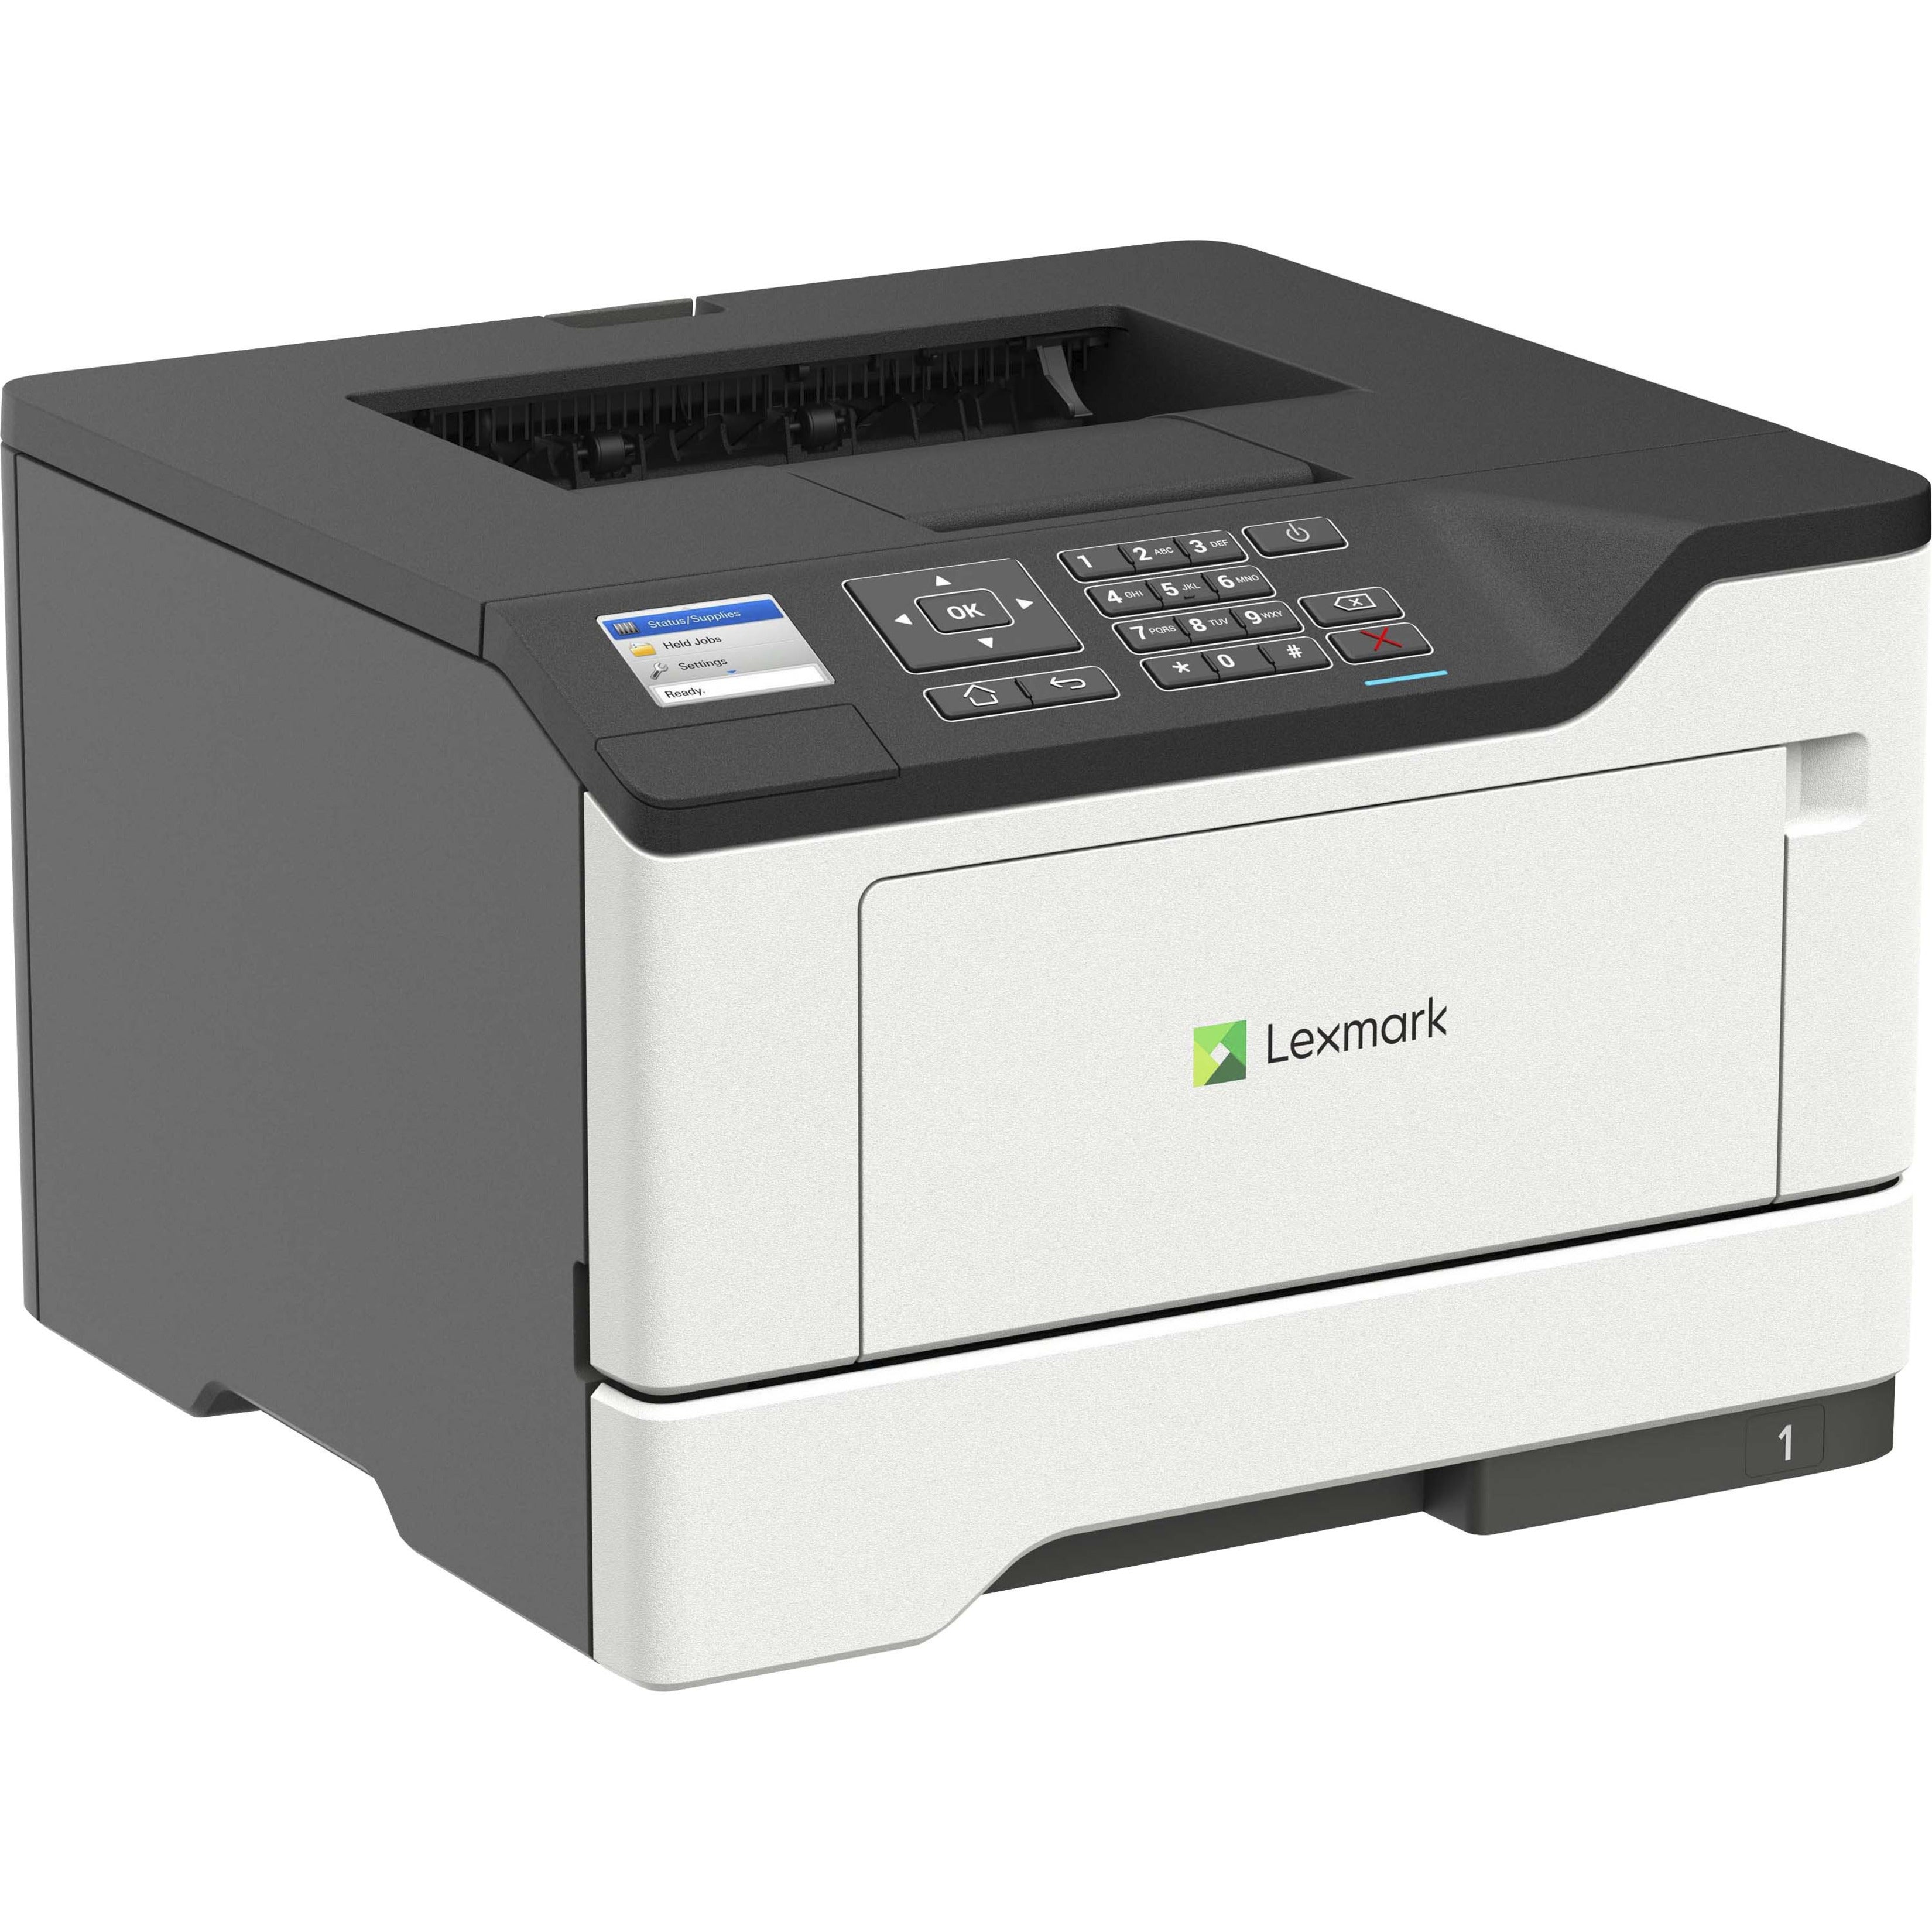 Lexmark 36S0300 MS521dn Laser Printer, Monochrome, Automatic Duplex Printing, 46 ppm, 1200 x 1200 dpi